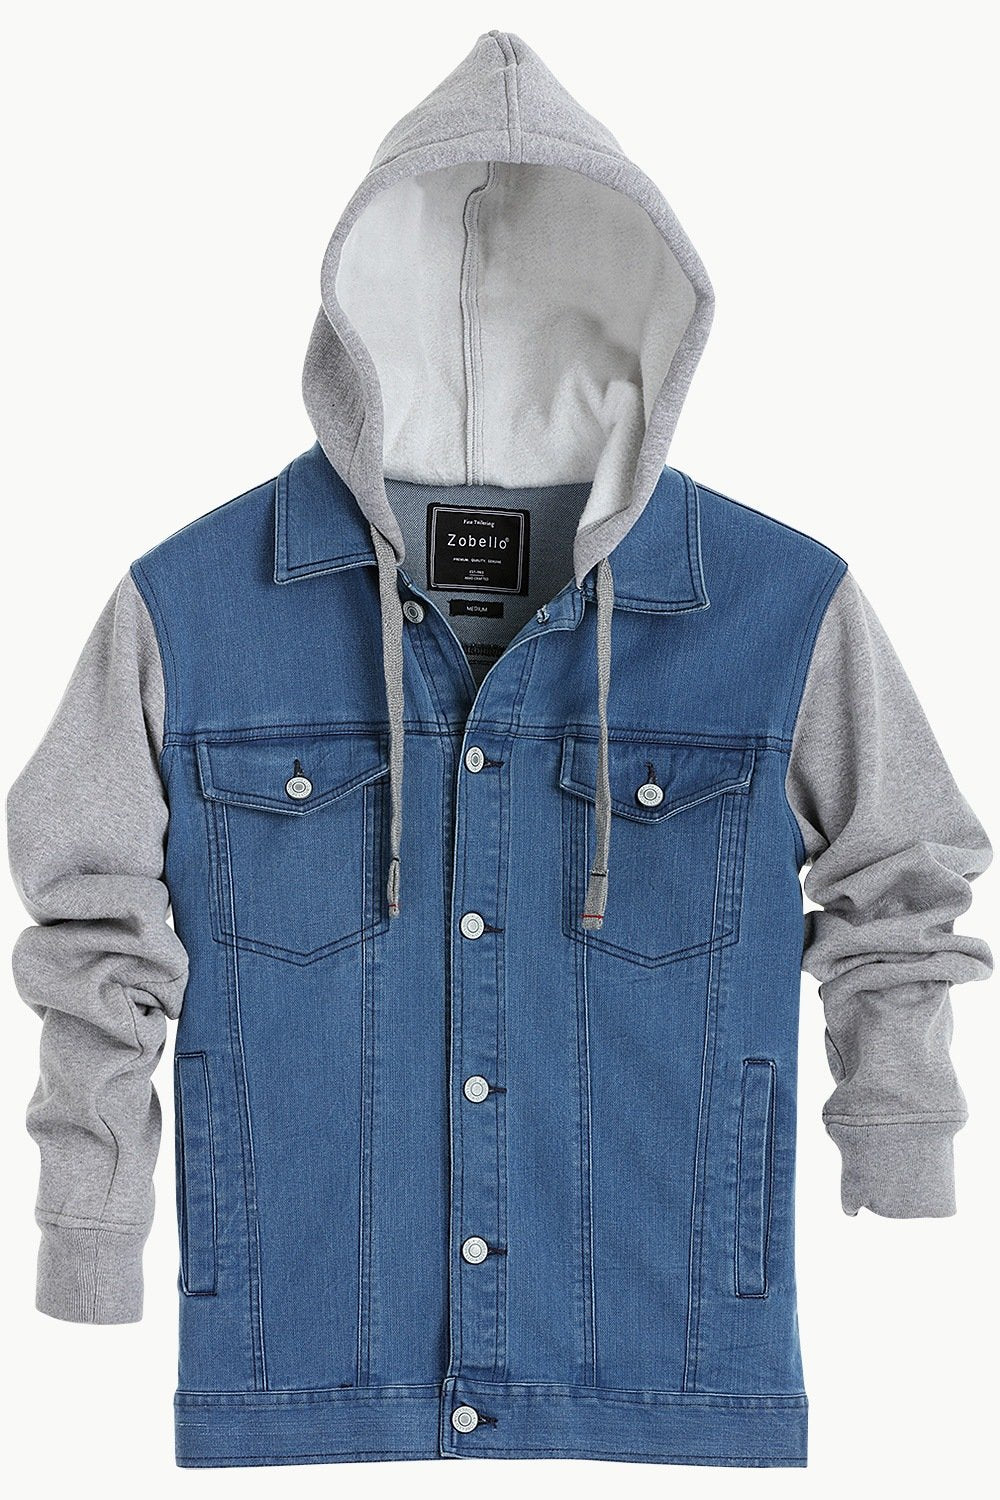 Buy Online Midwashed Indigo Hooded Denim Jacket for Men Online at Zobello